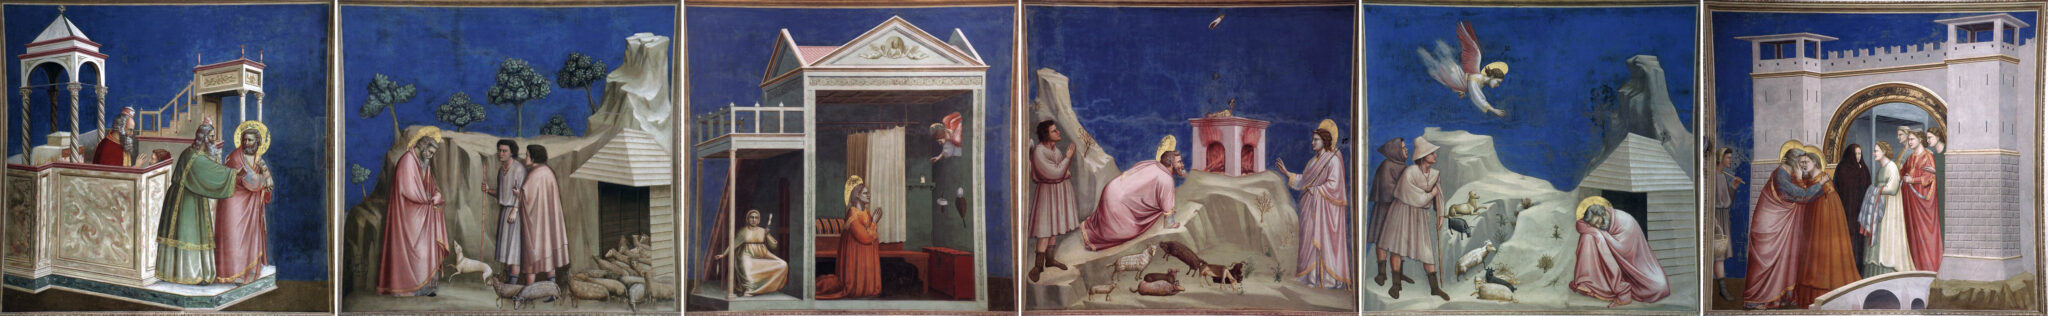 Padua’s 14th c. frescoes get World Heritage status